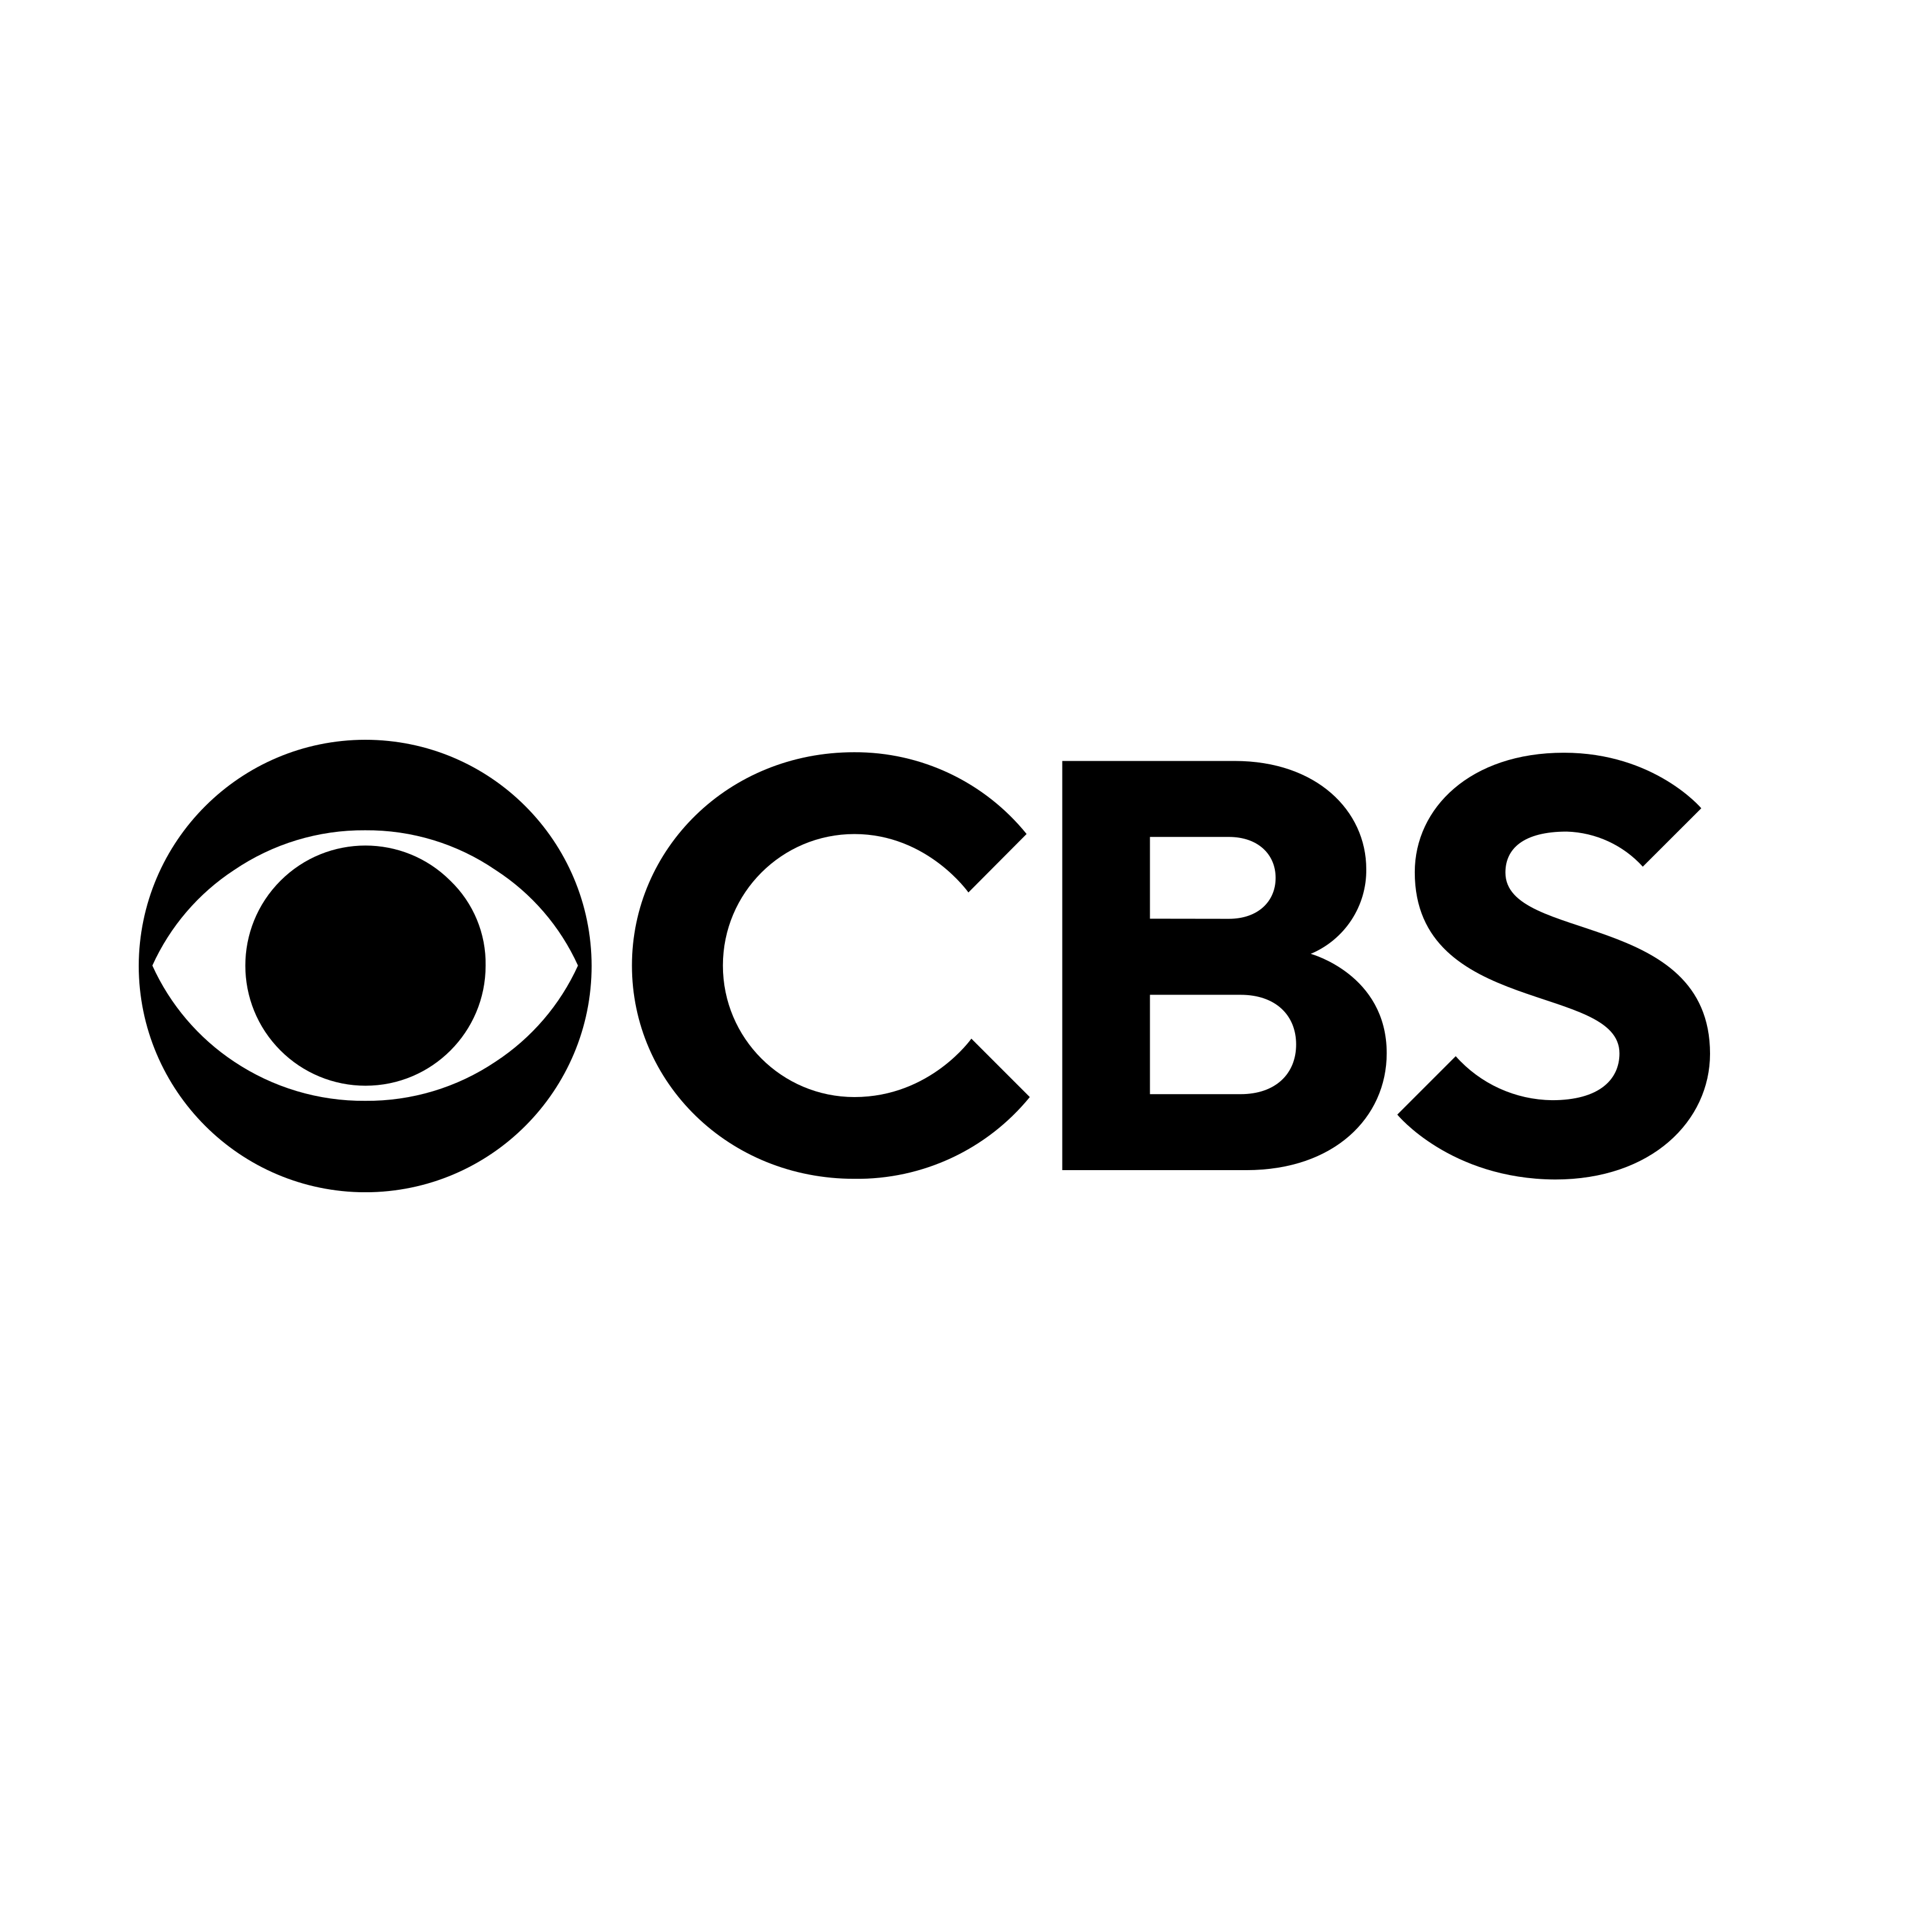 CBS_Logo